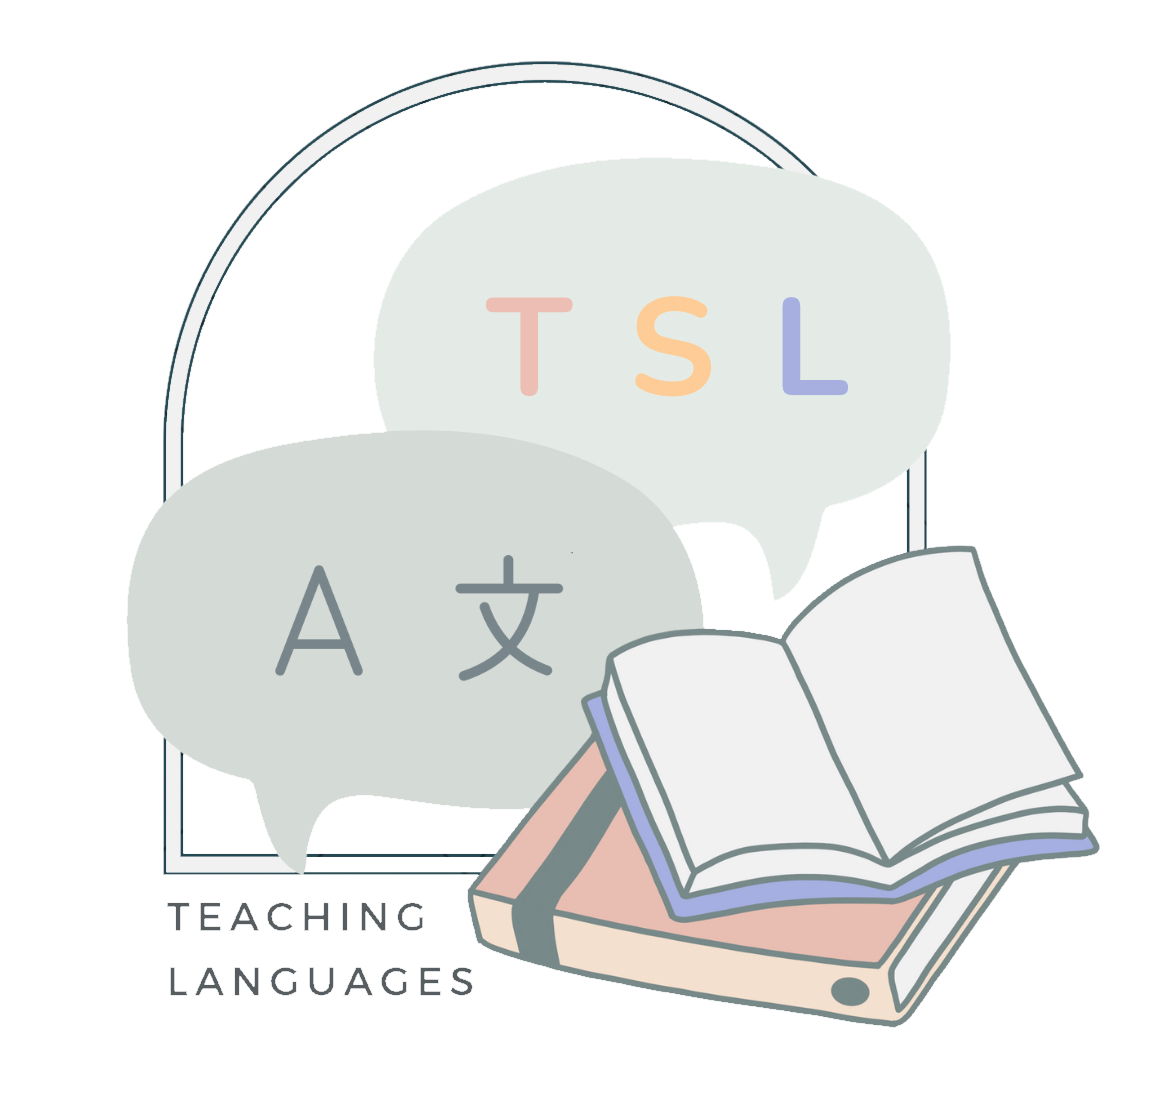 Teaching Second Language Logo